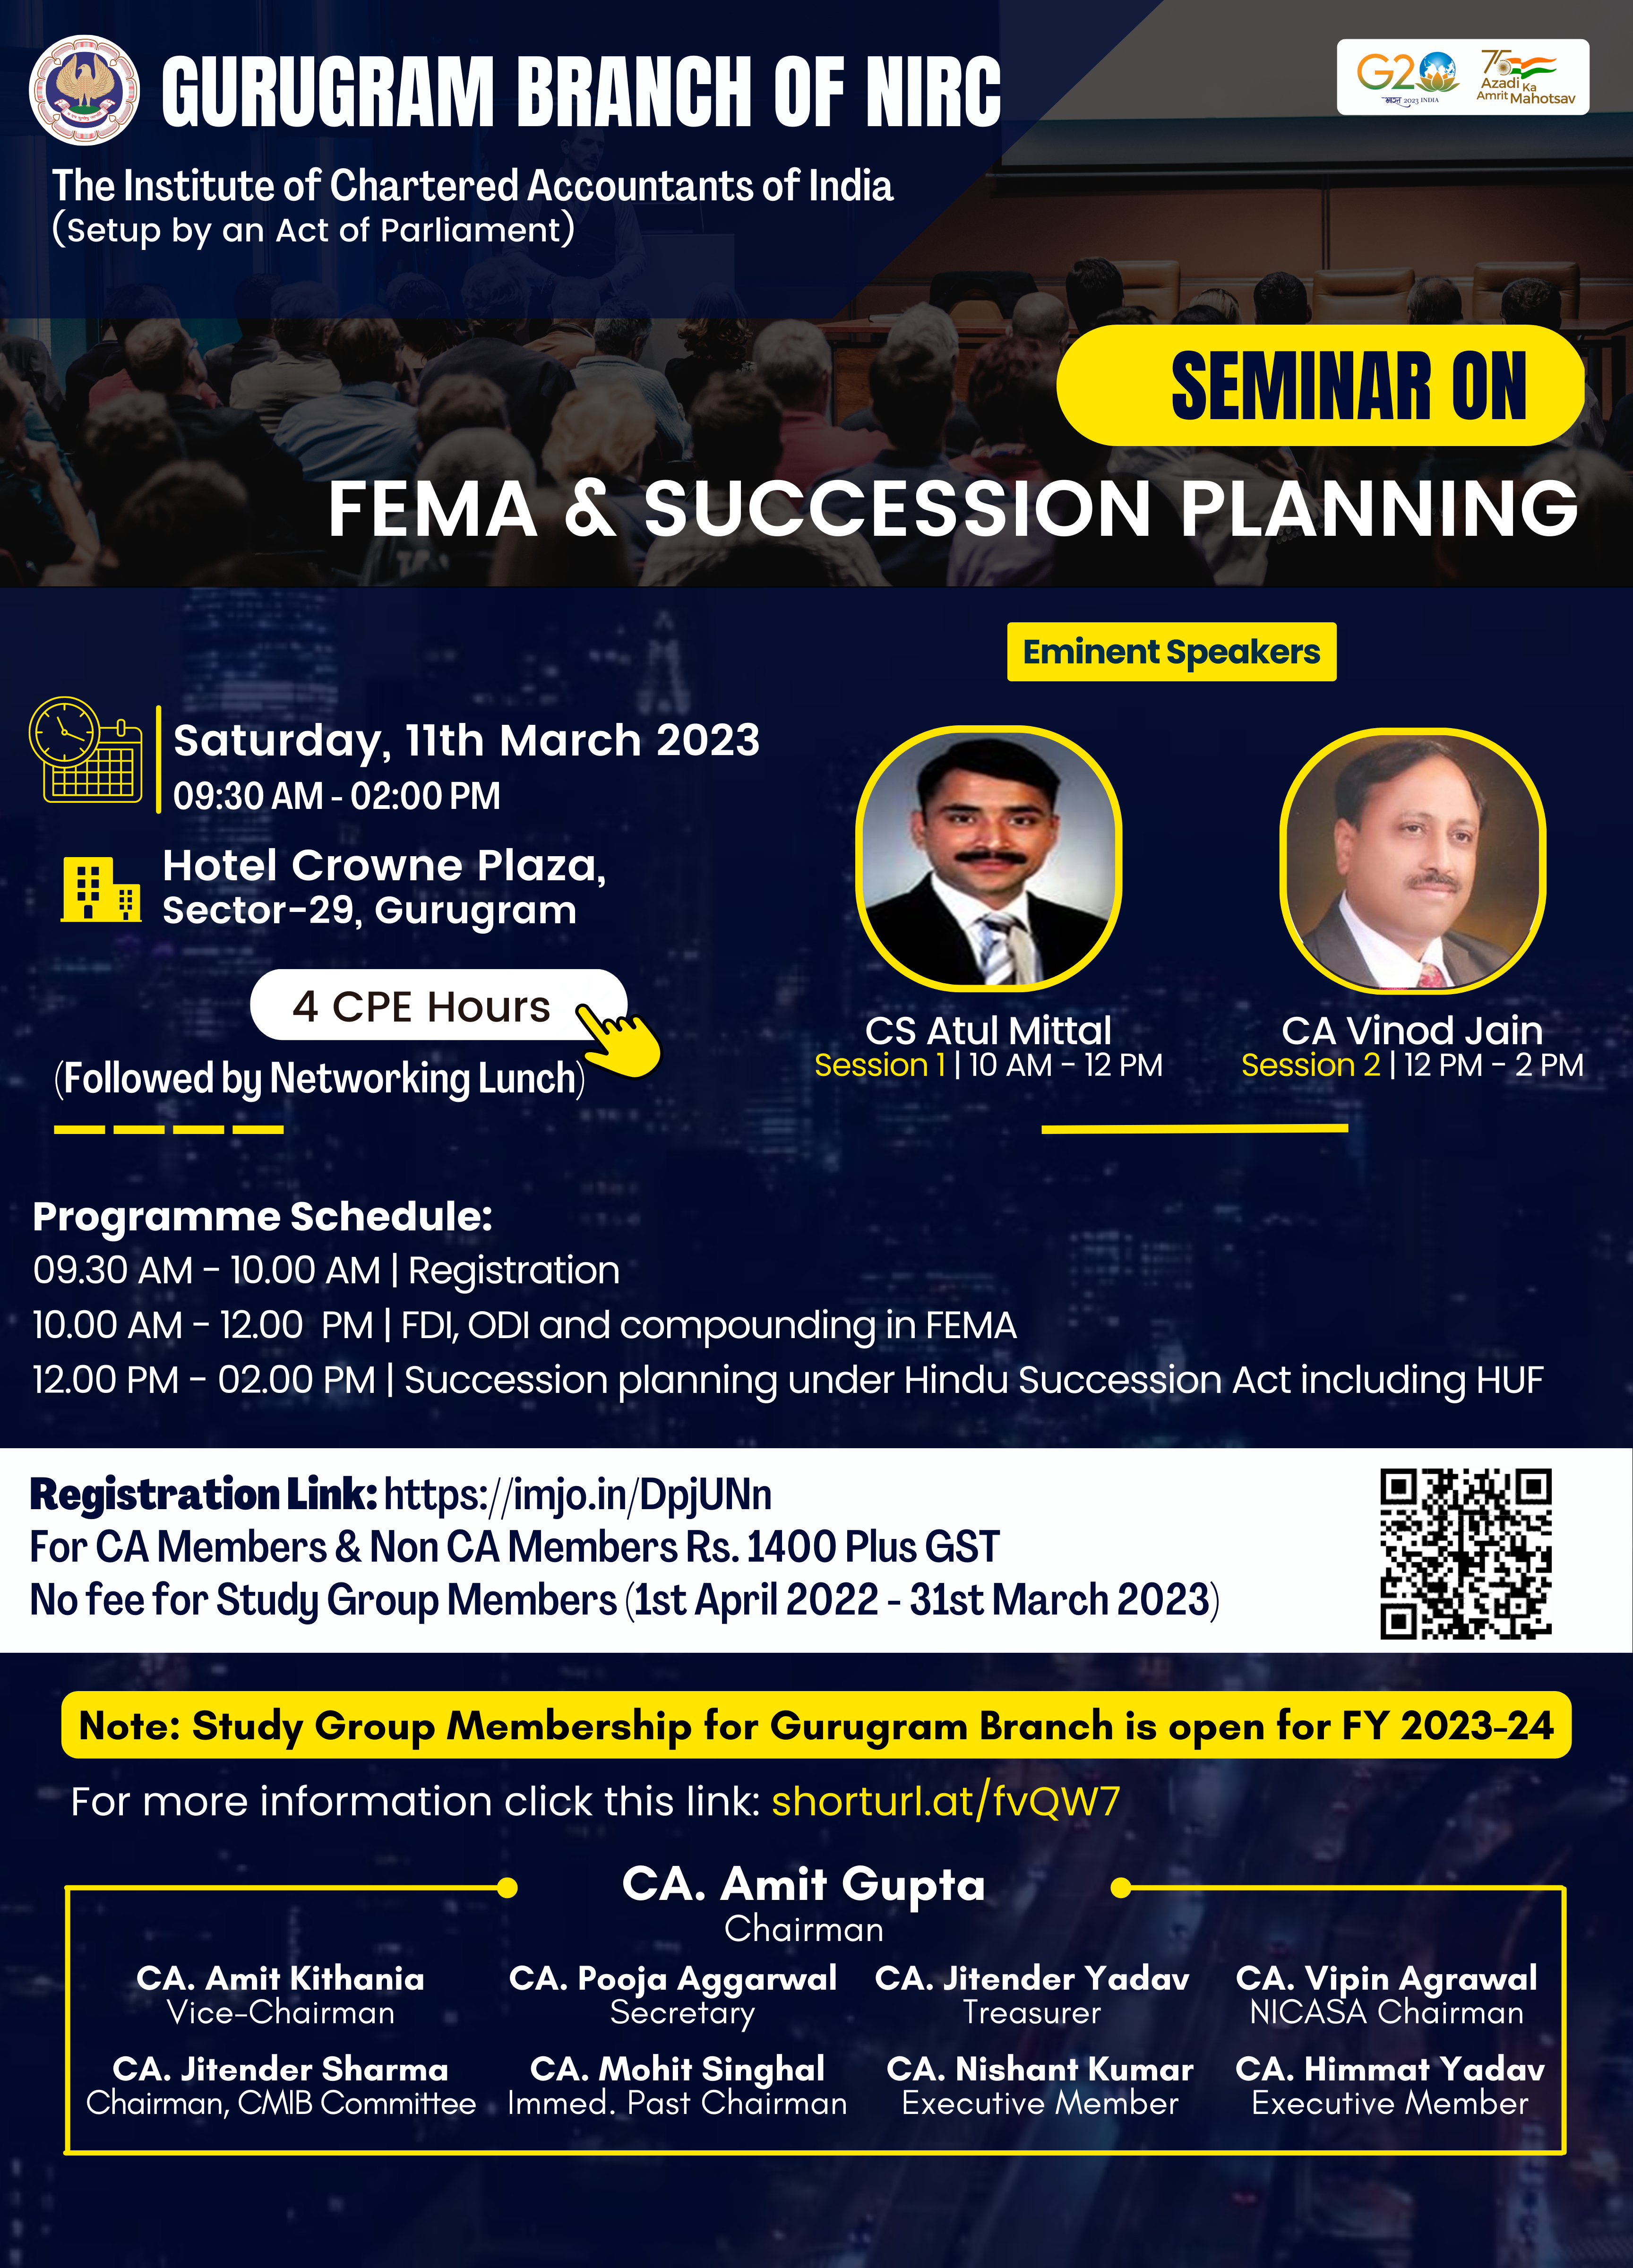 Physical Seminar on FEMA & Succession Planning